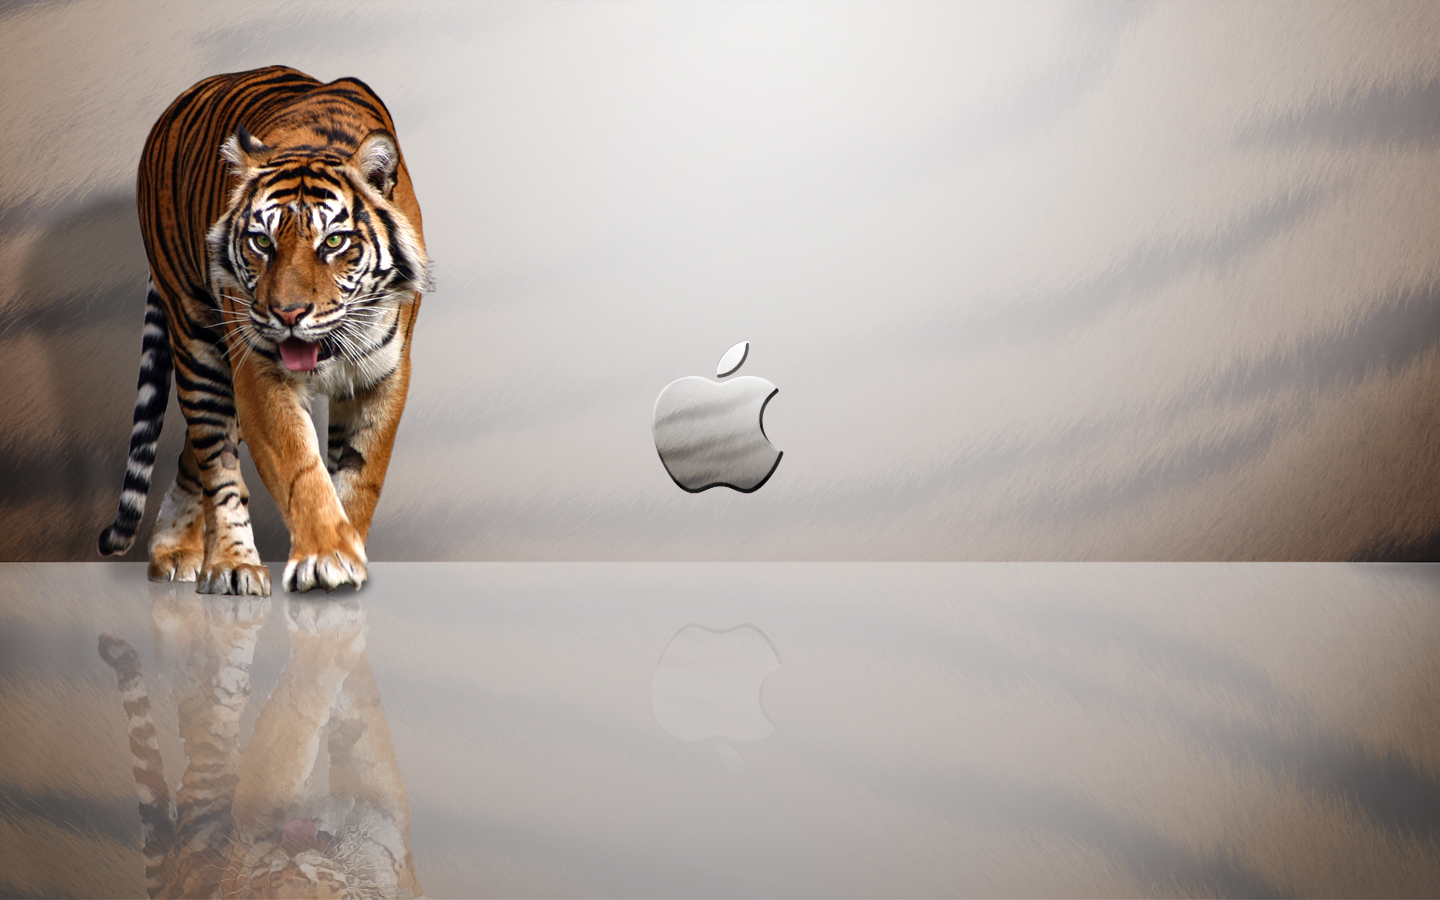  desktop backgrounds for mac desktop backgrounds mac Desktop